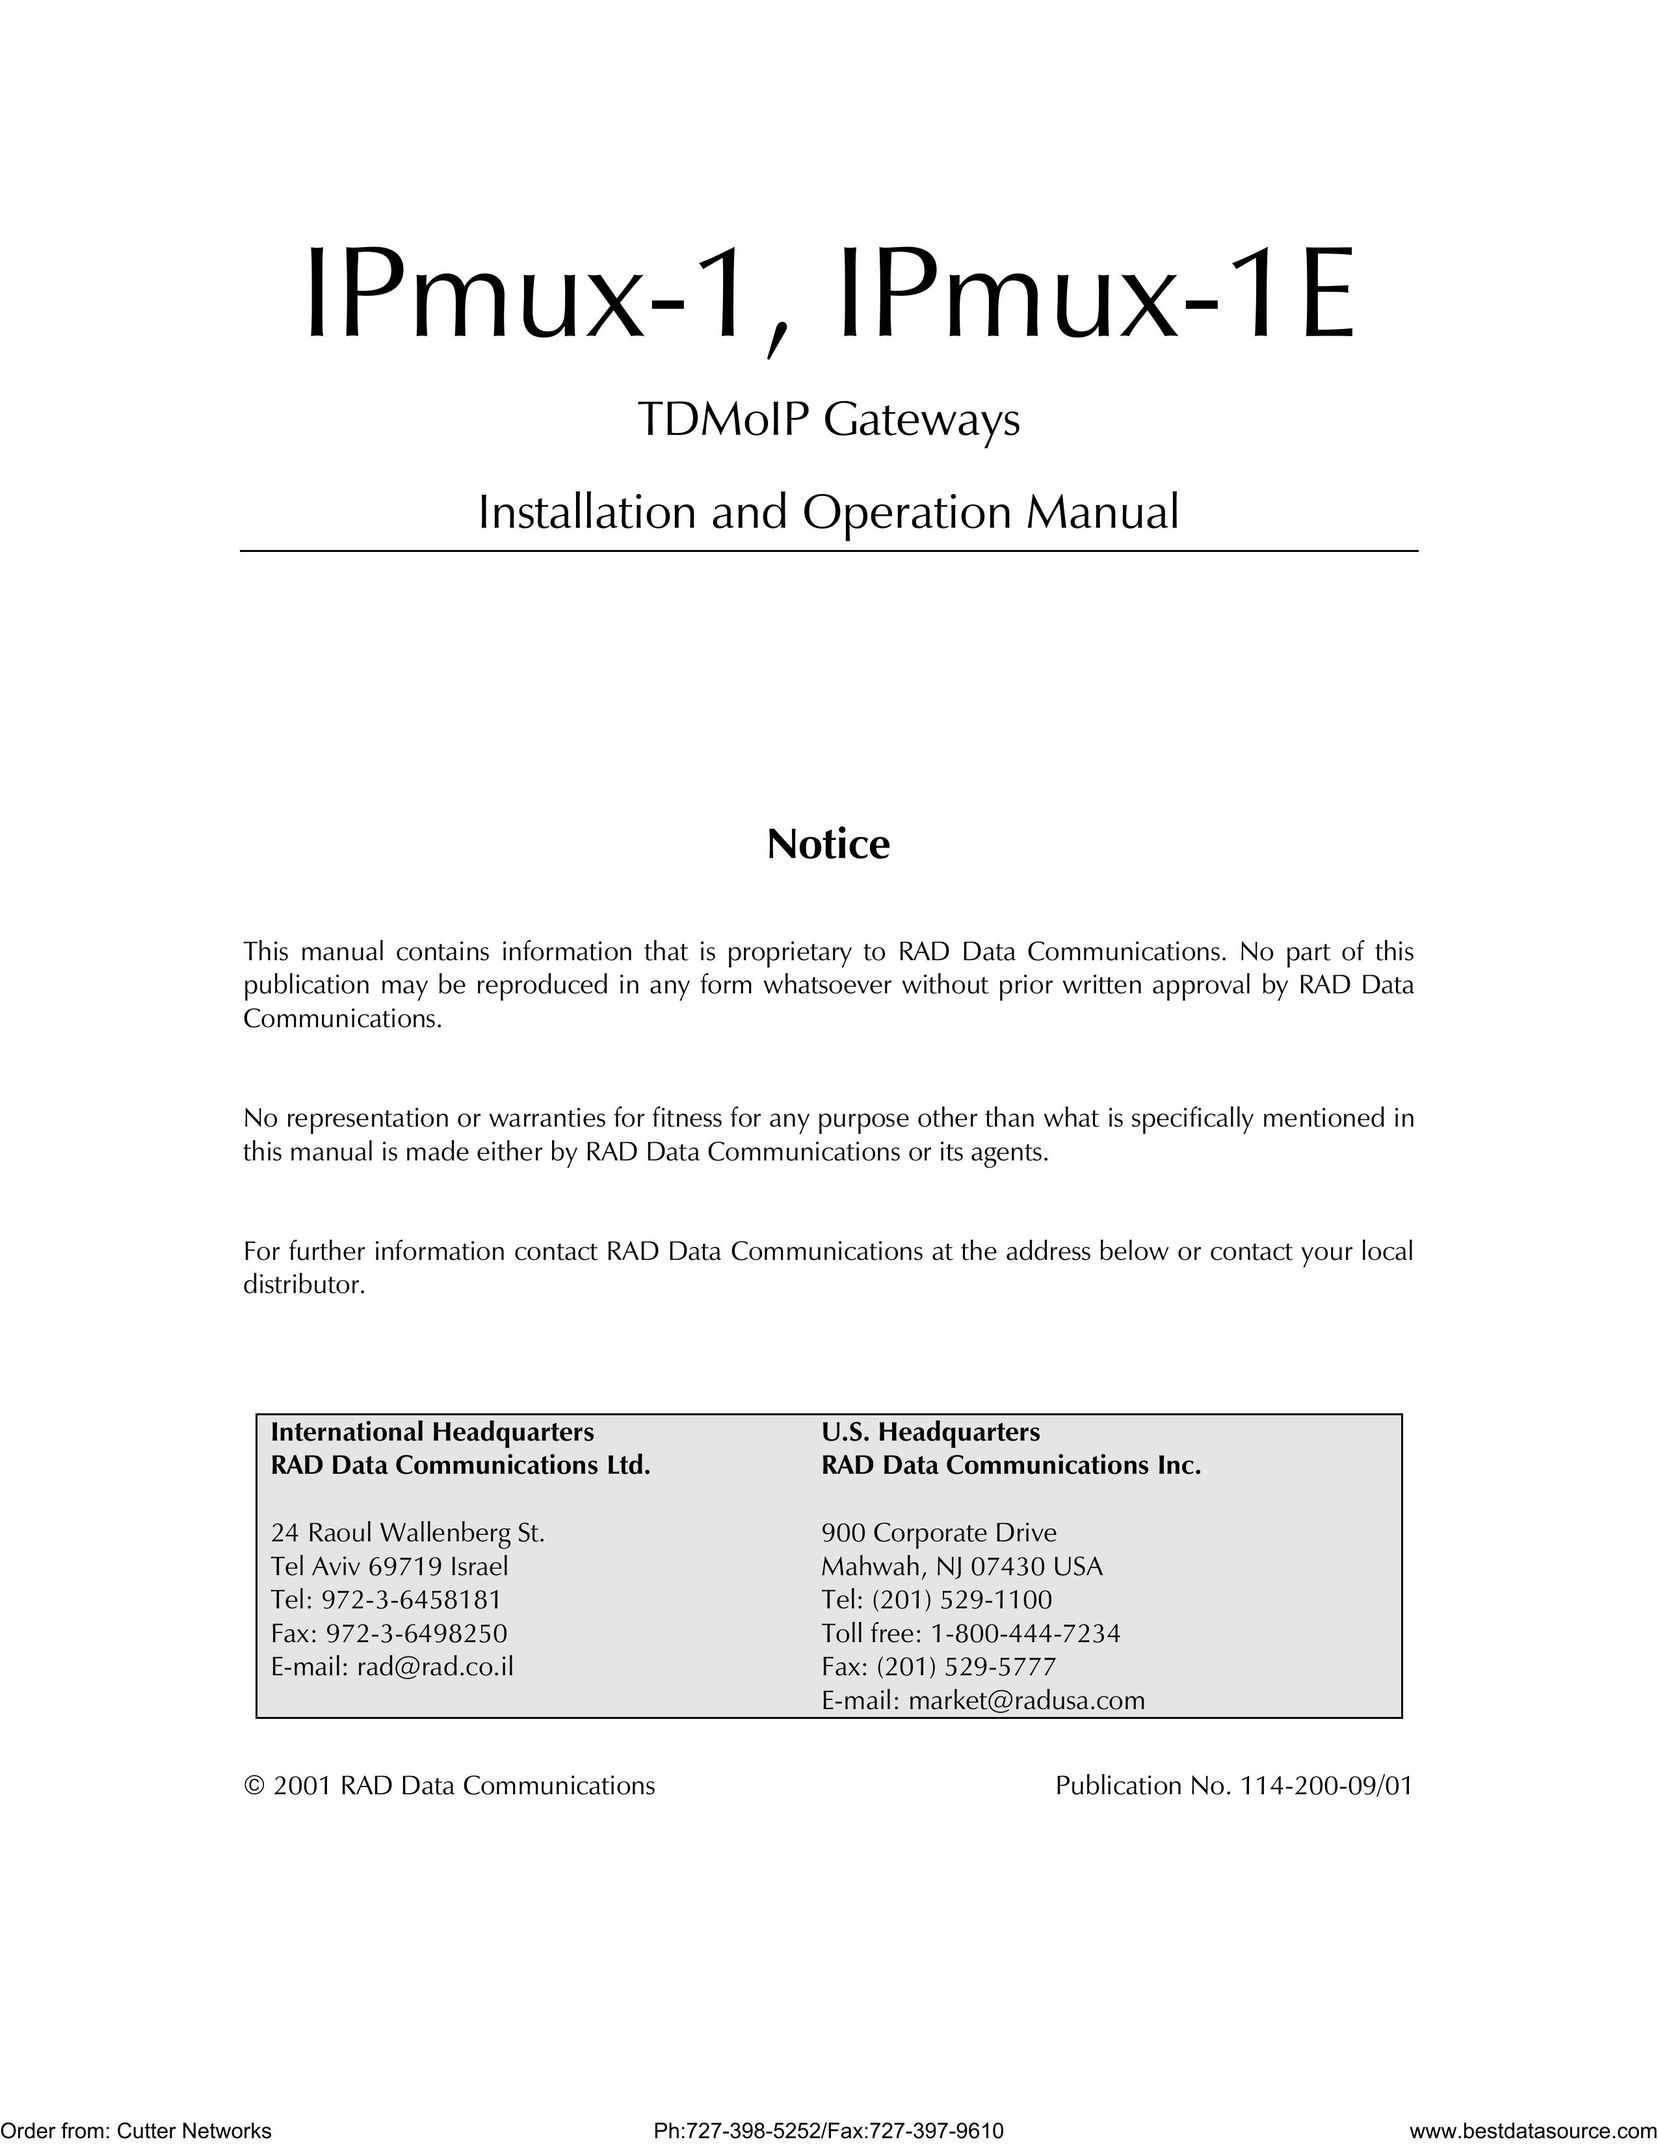 RAD Data comm IPmux-1 Network Card User Manual